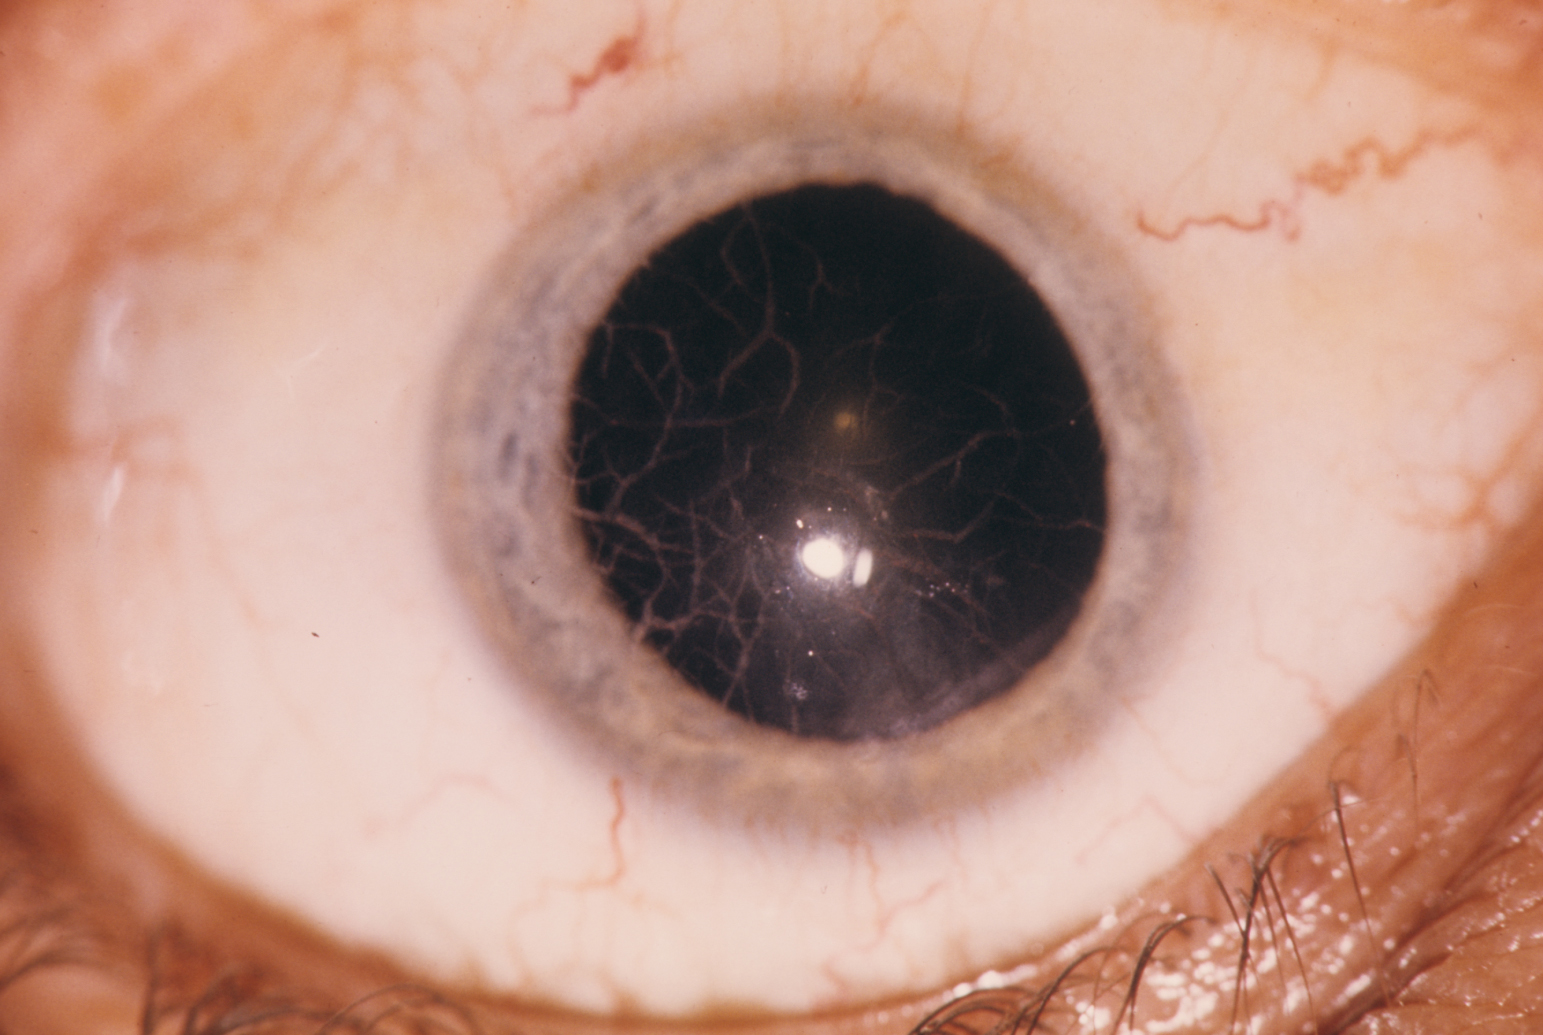 Lattice dystrophy of the cornea